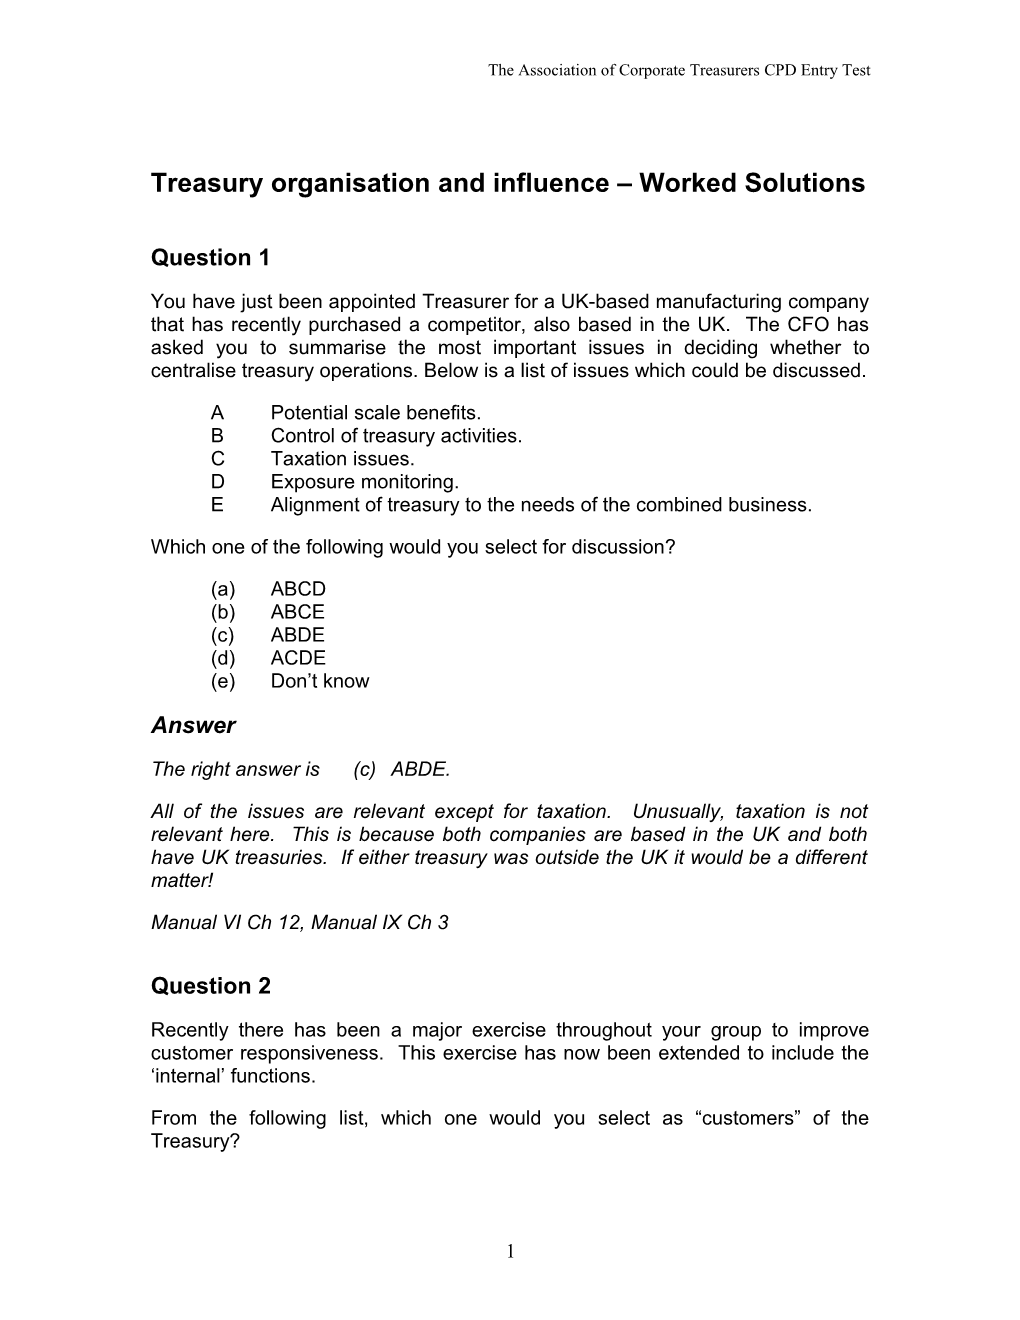 Treasury Organisation and Influence